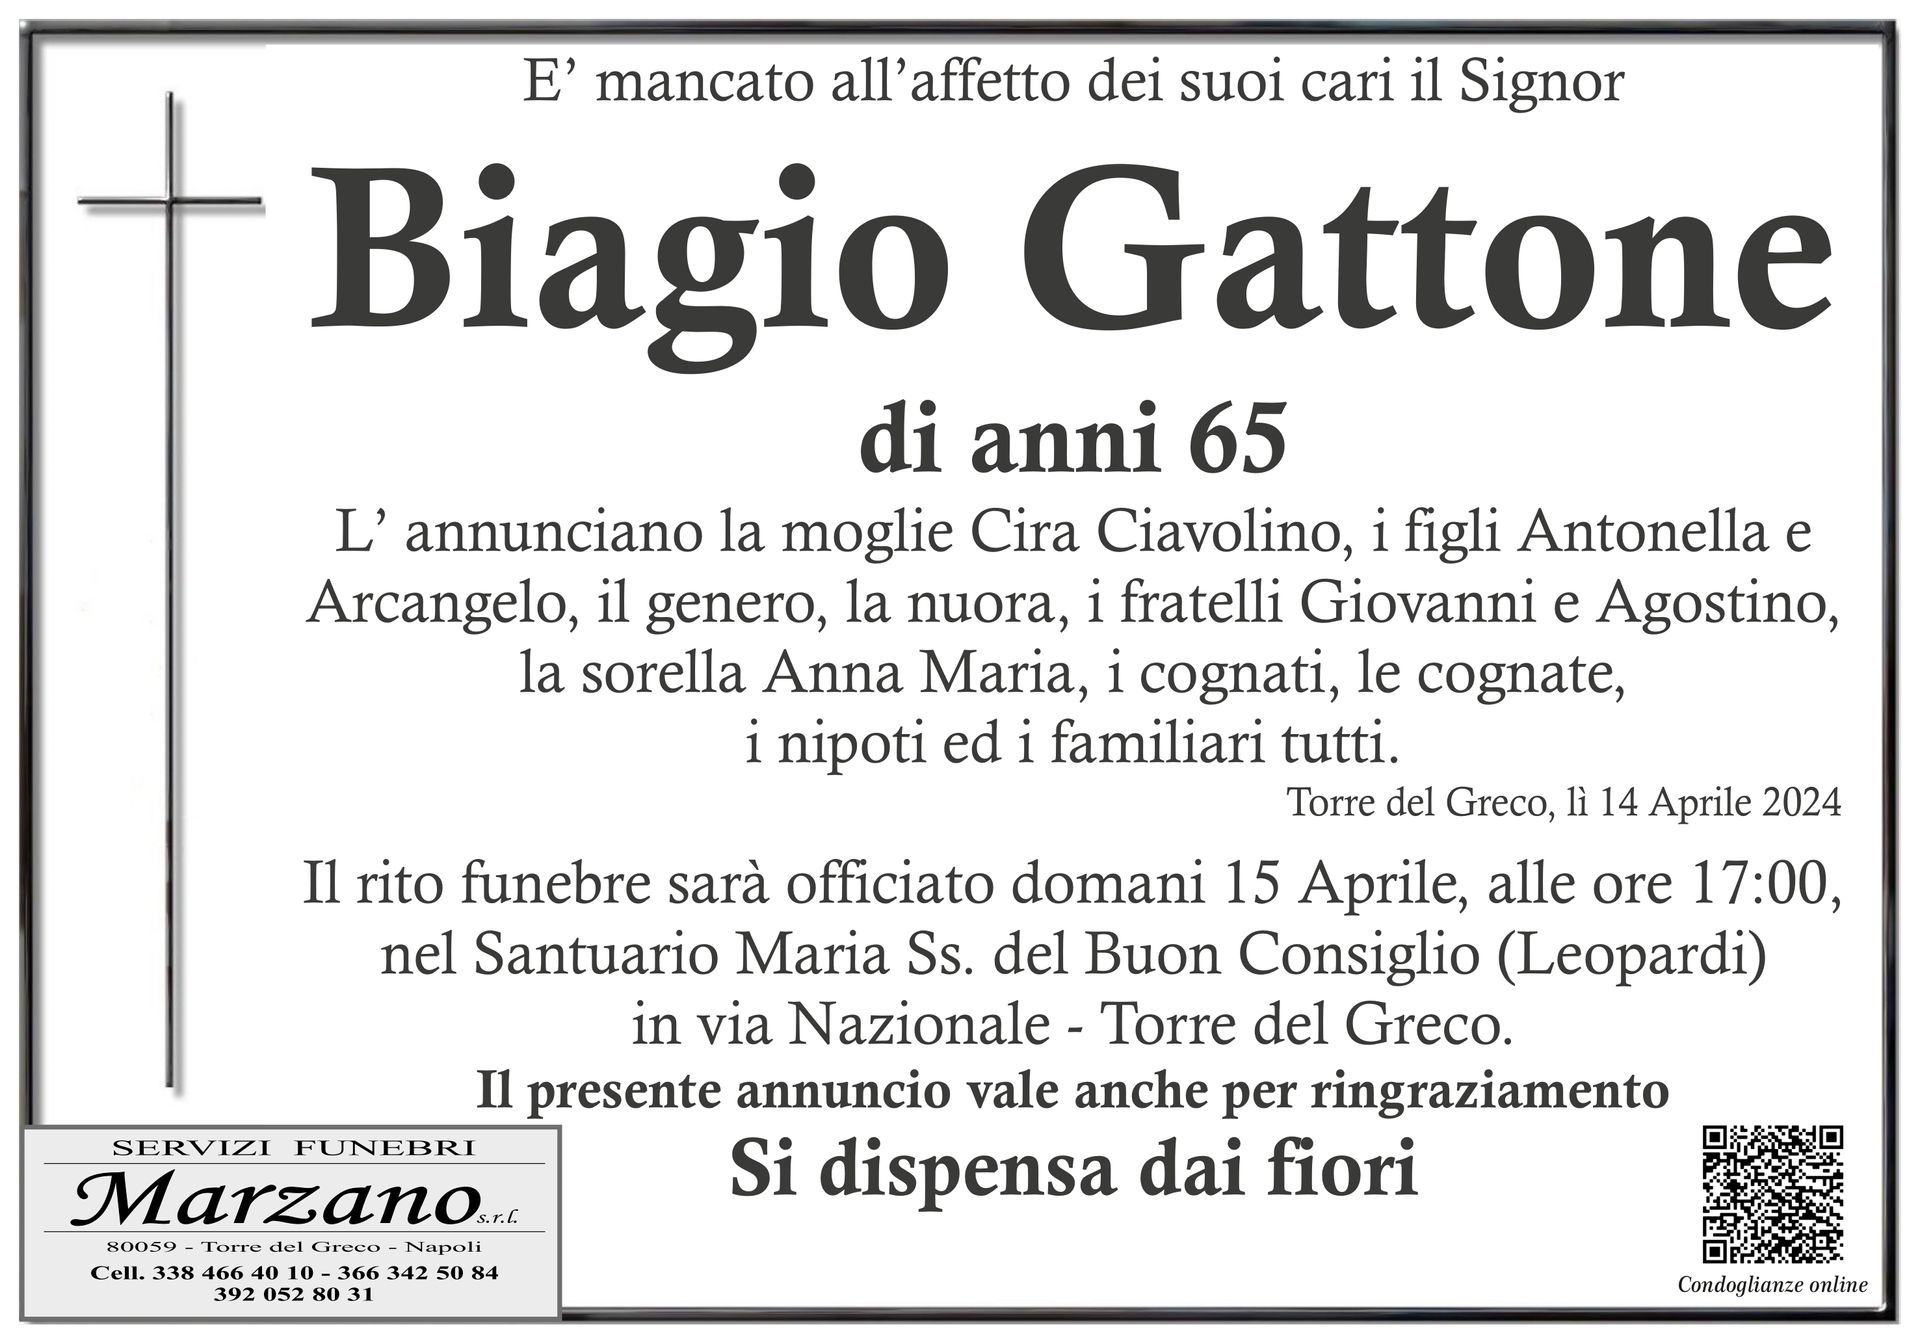 Biagio Gattone